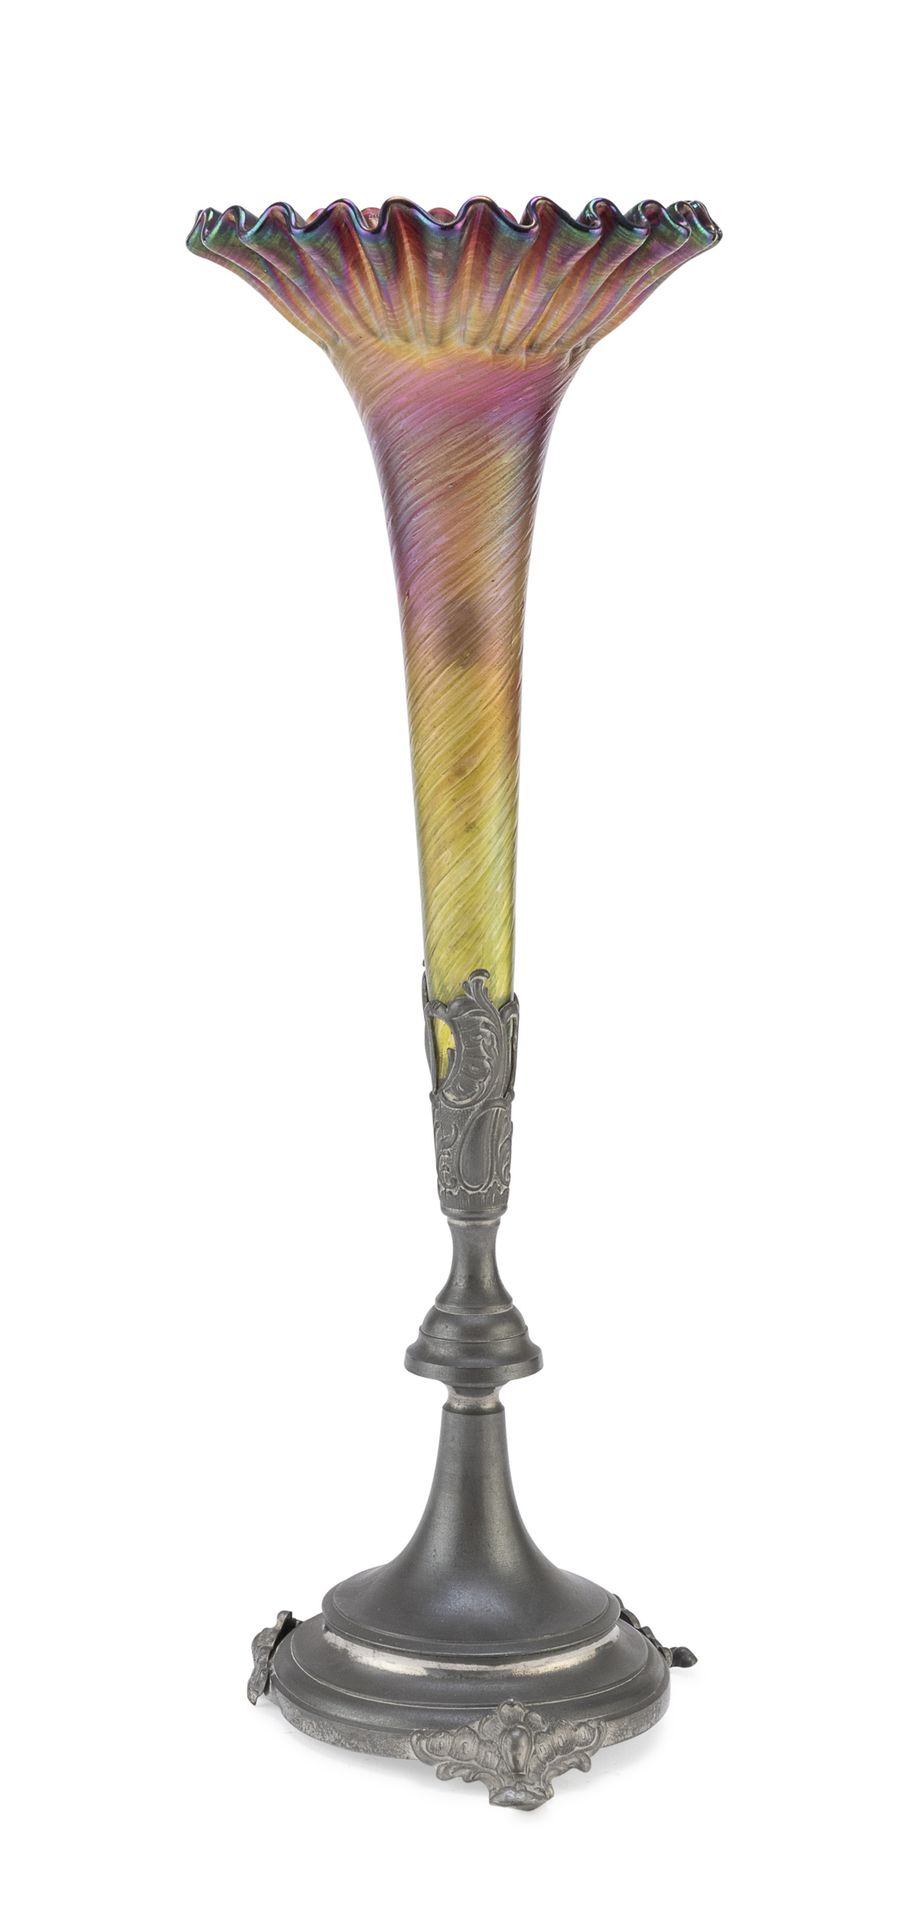 Null 德国1930年代吹制的玻璃溶器


五彩斑斓的背景，有阴影的紫色和黄色。锥体形状，带花边。锡镴支架和脚。


尺寸为38 x 13厘米。


缺少一只&hellip;